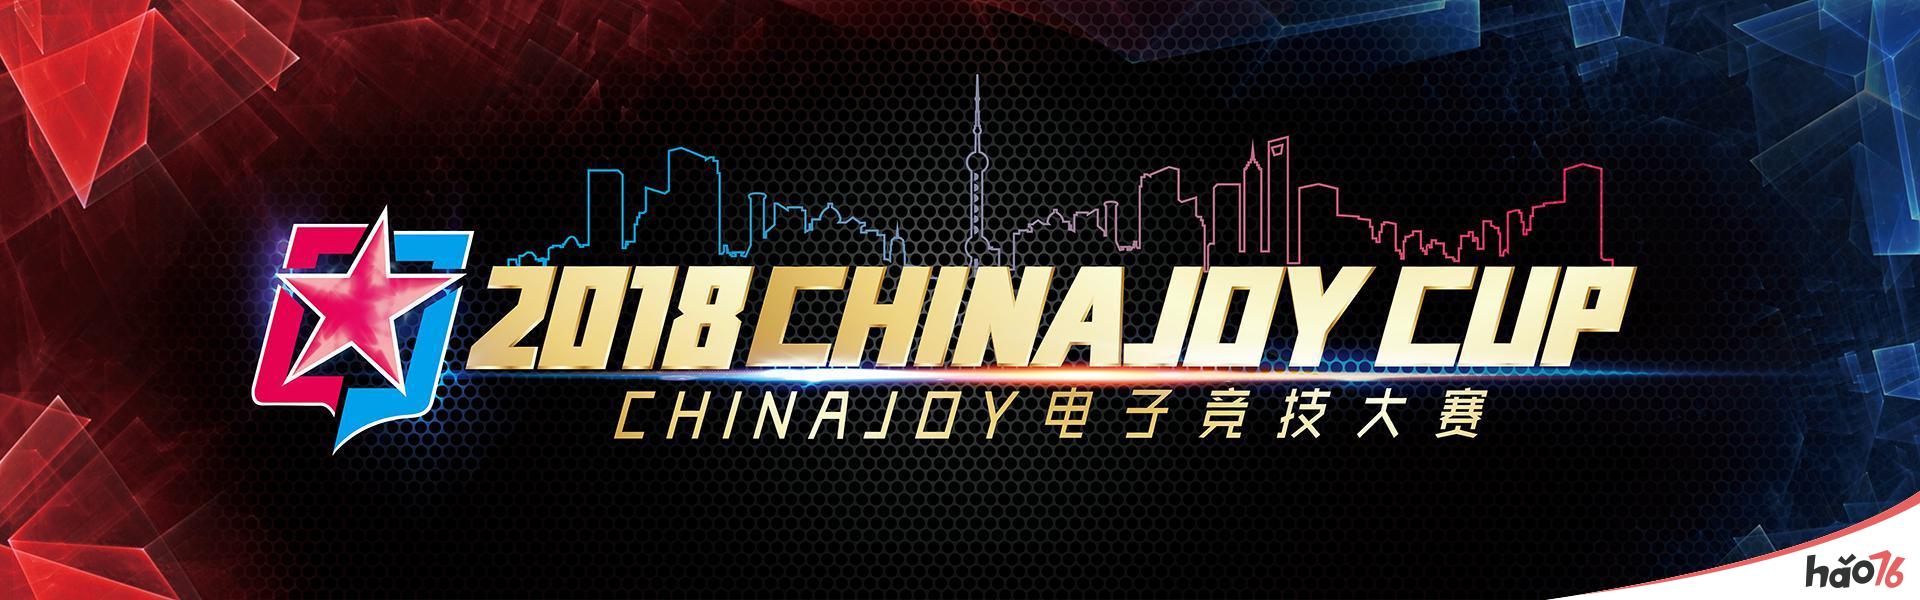 2018ChinaJoy电子竞技大赛三明赛区B组决出胜负